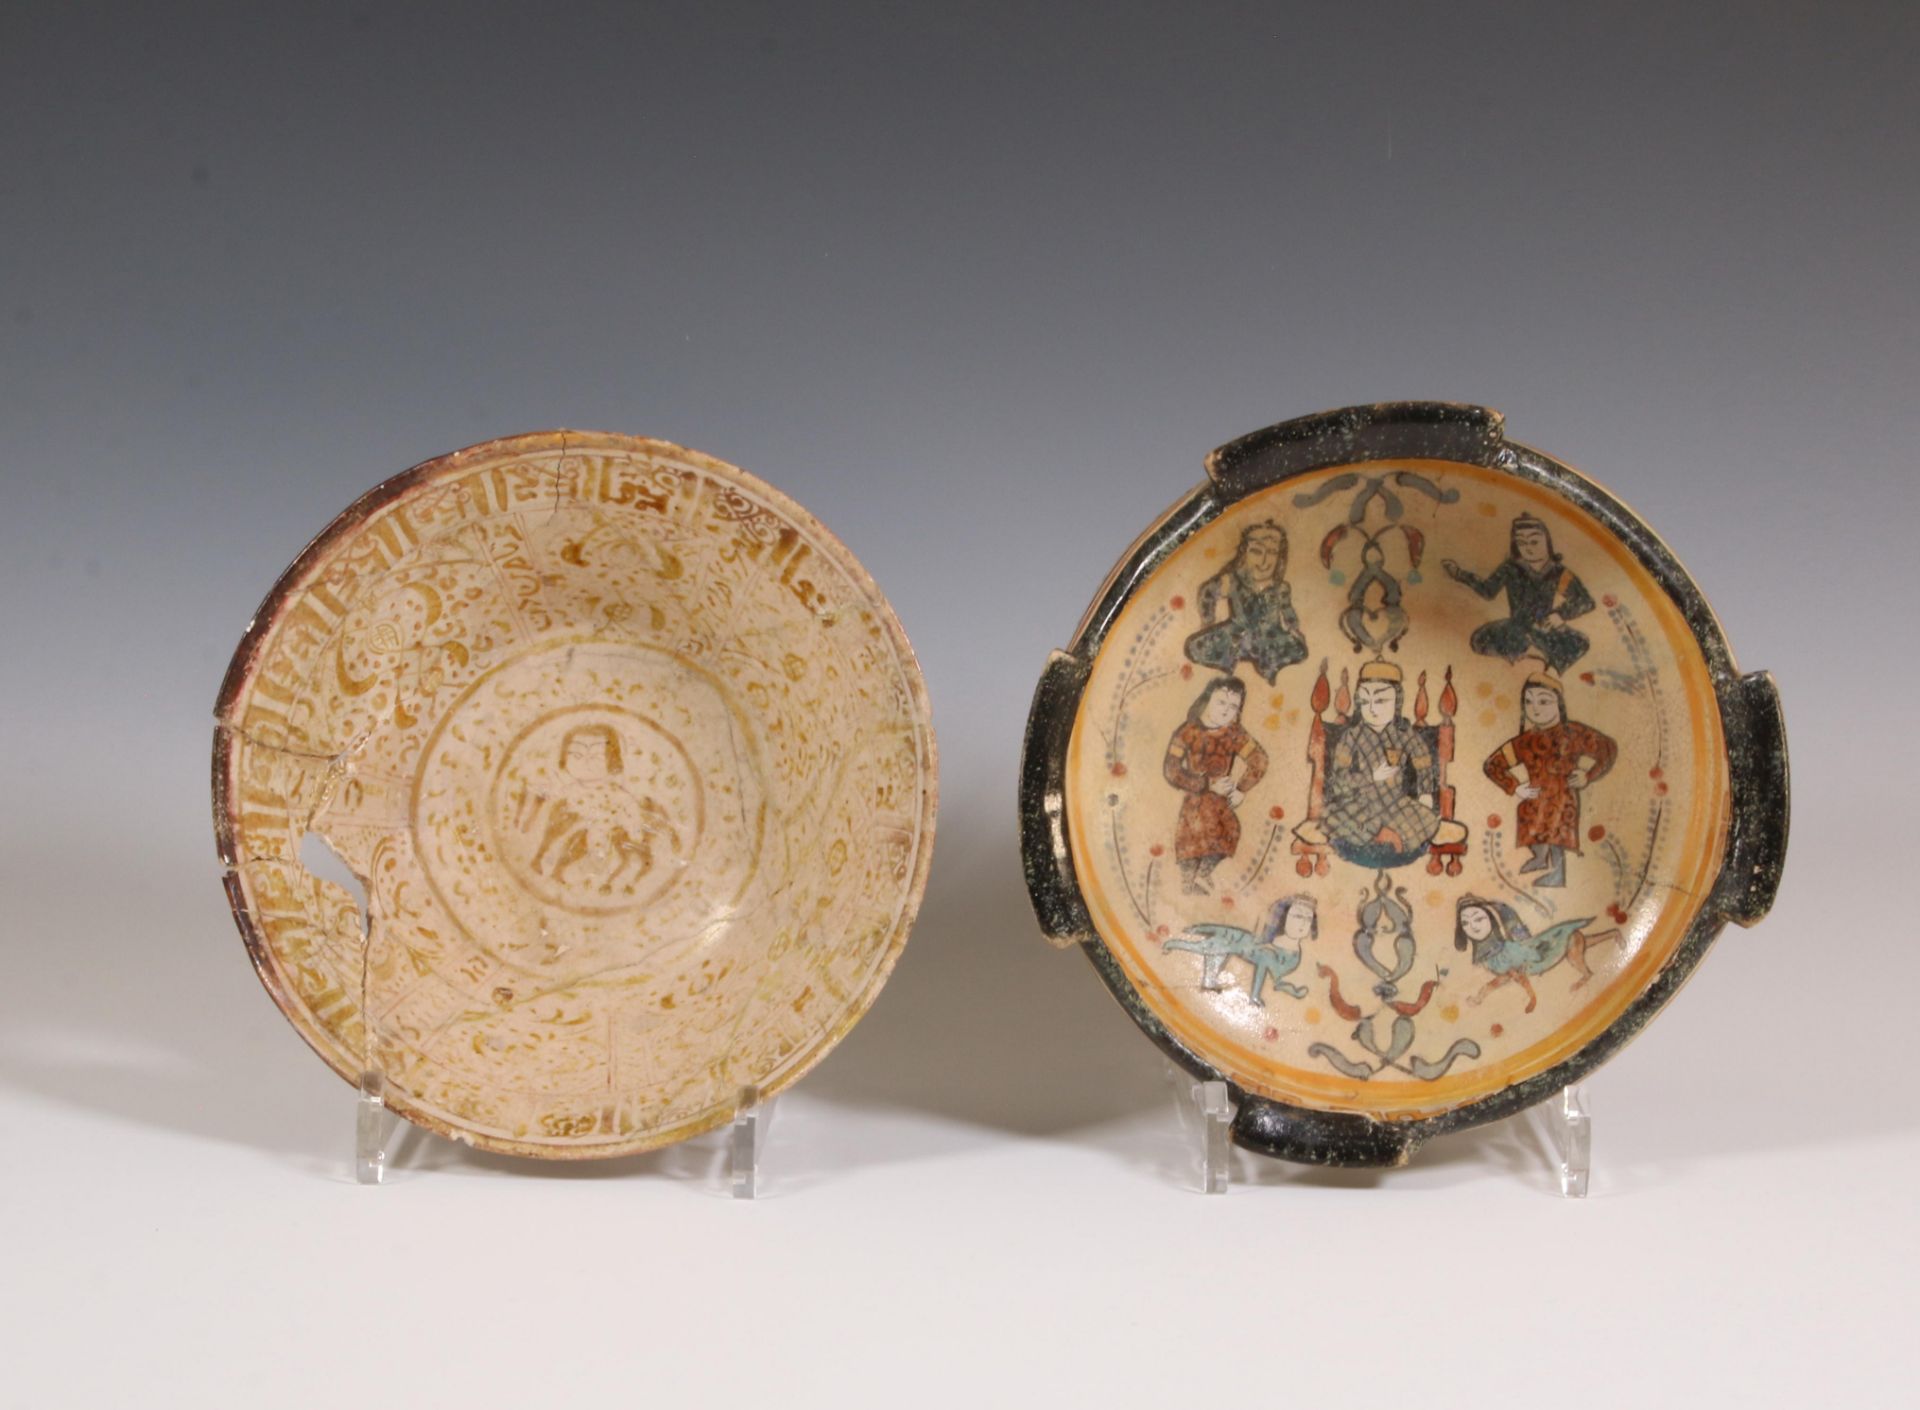 Persia, a minai pottery bowl, possibly 12th-13th century